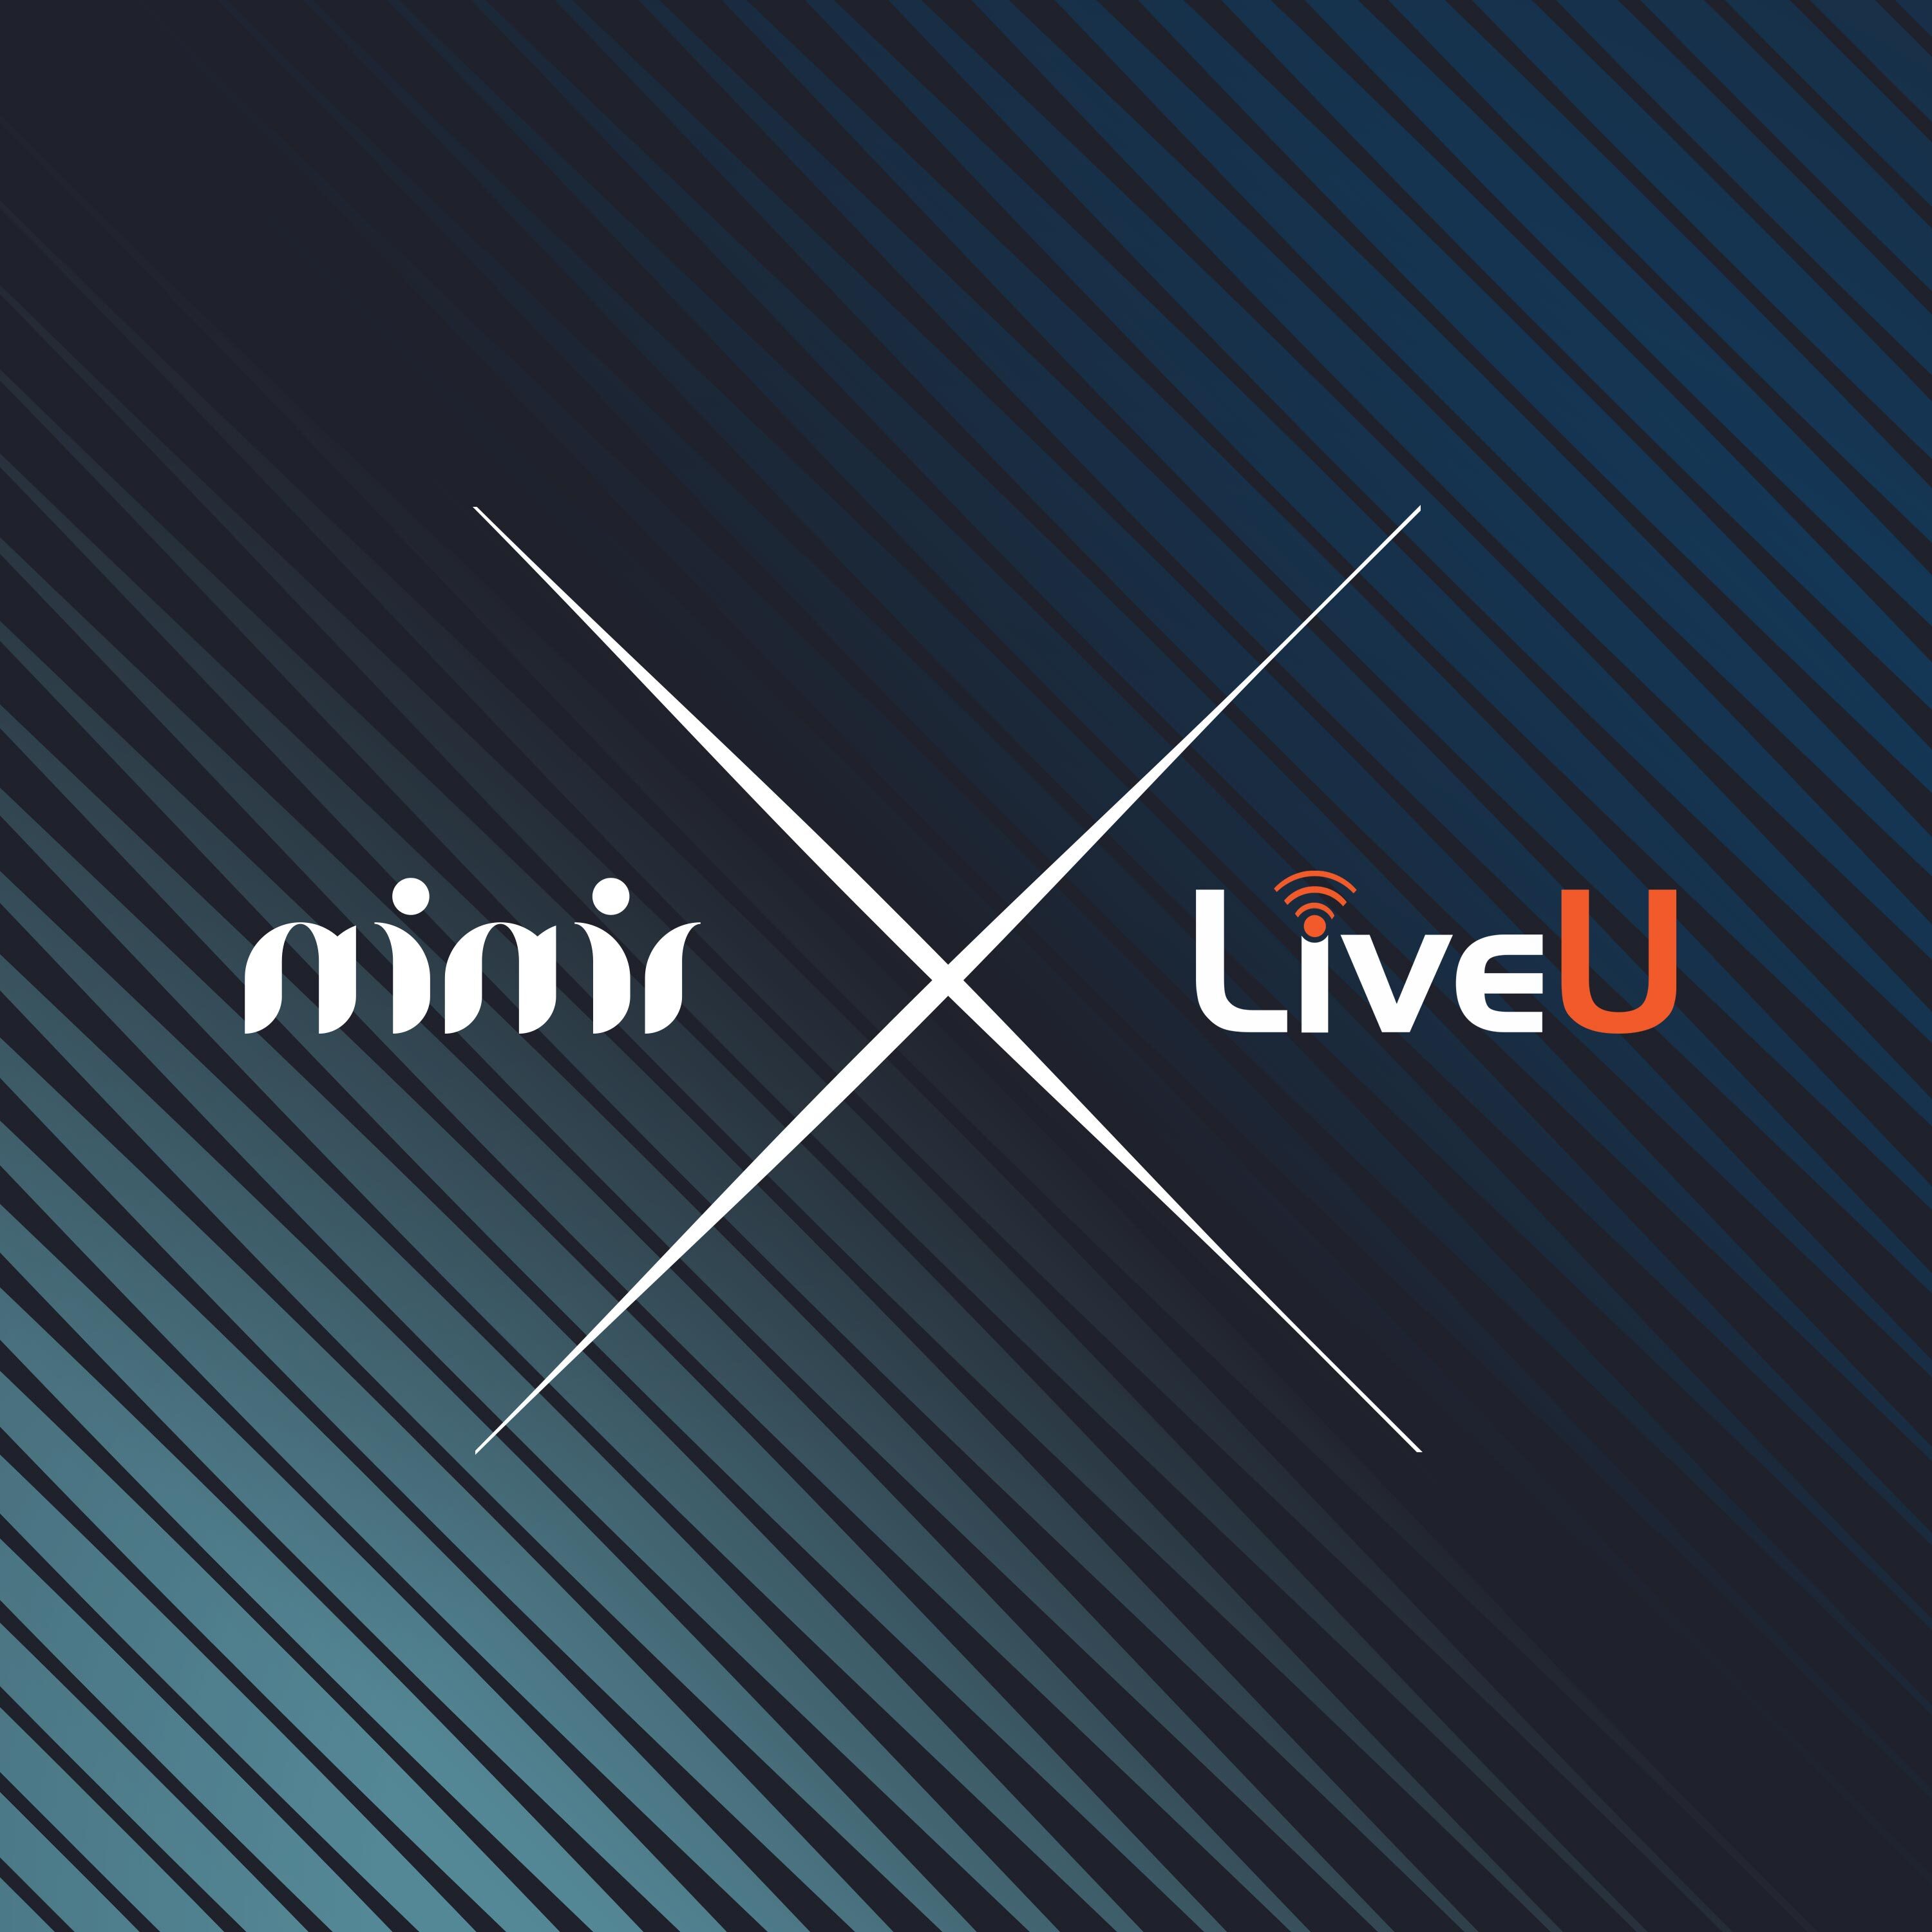 The mimir and LiveU logos together